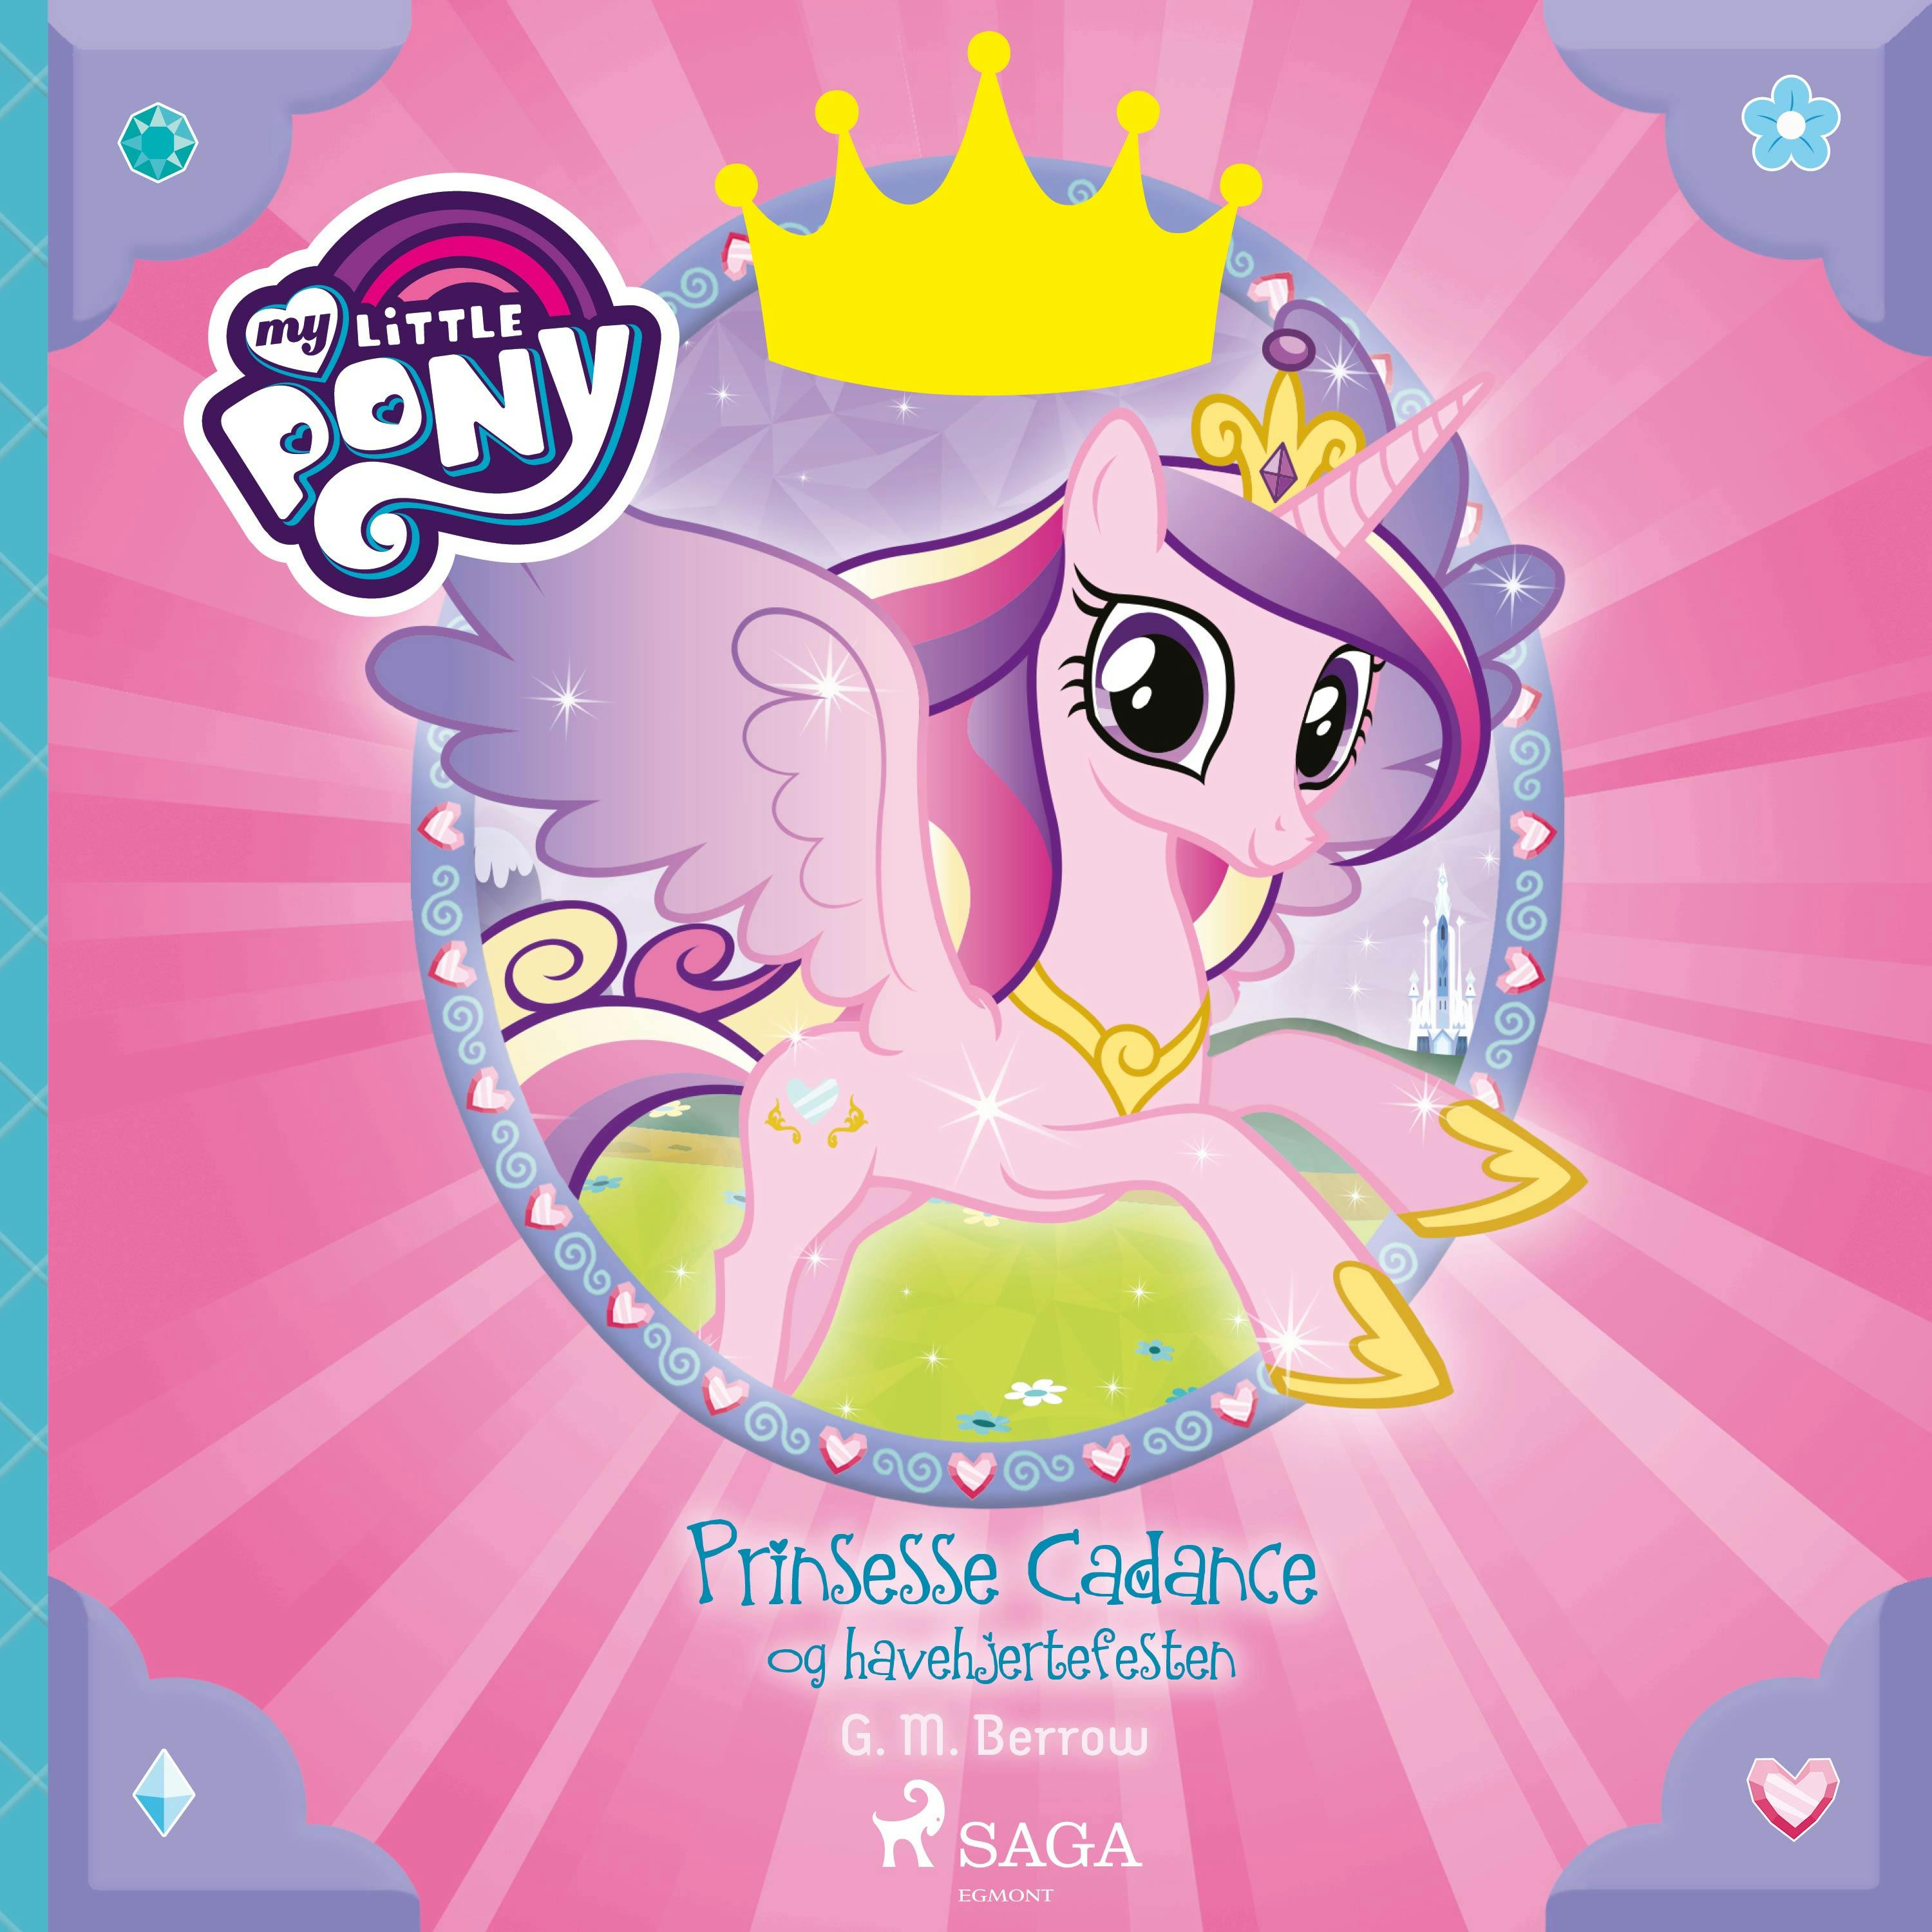 My Little Pony - Prinsesse Cadance og havehjertefesten - G. M. Berrow